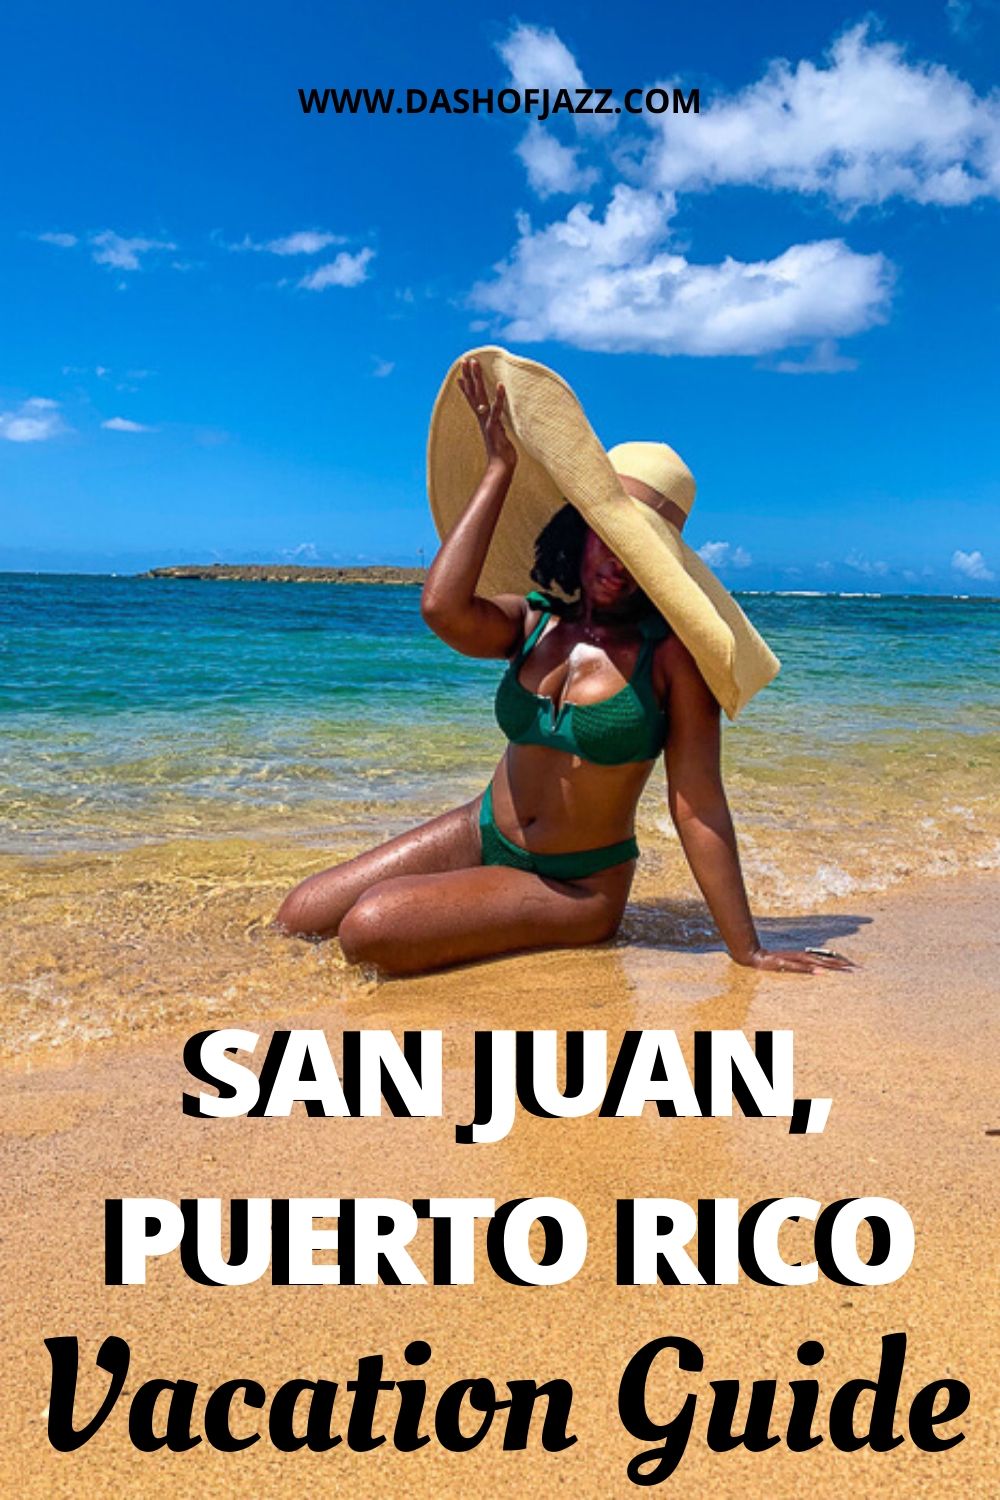 Jazzmine on beach with text overlay "san juan puerto rico vacation guide"